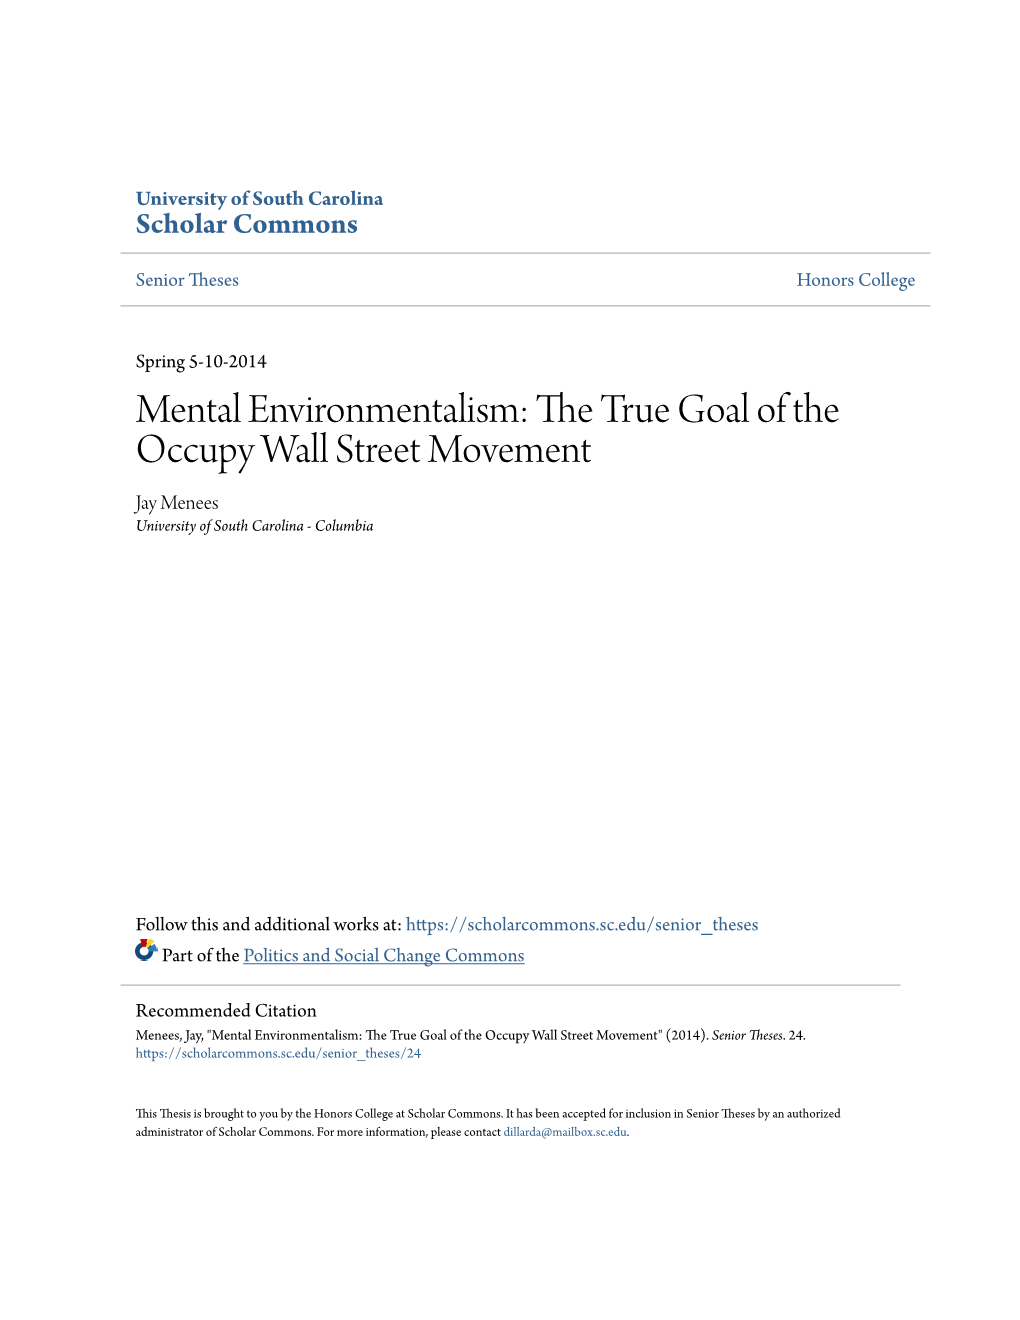 Mental Environmentalism: the Rt Ue Goal of the Occupy Wall Street Movement Jay Menees University of South Carolina - Columbia